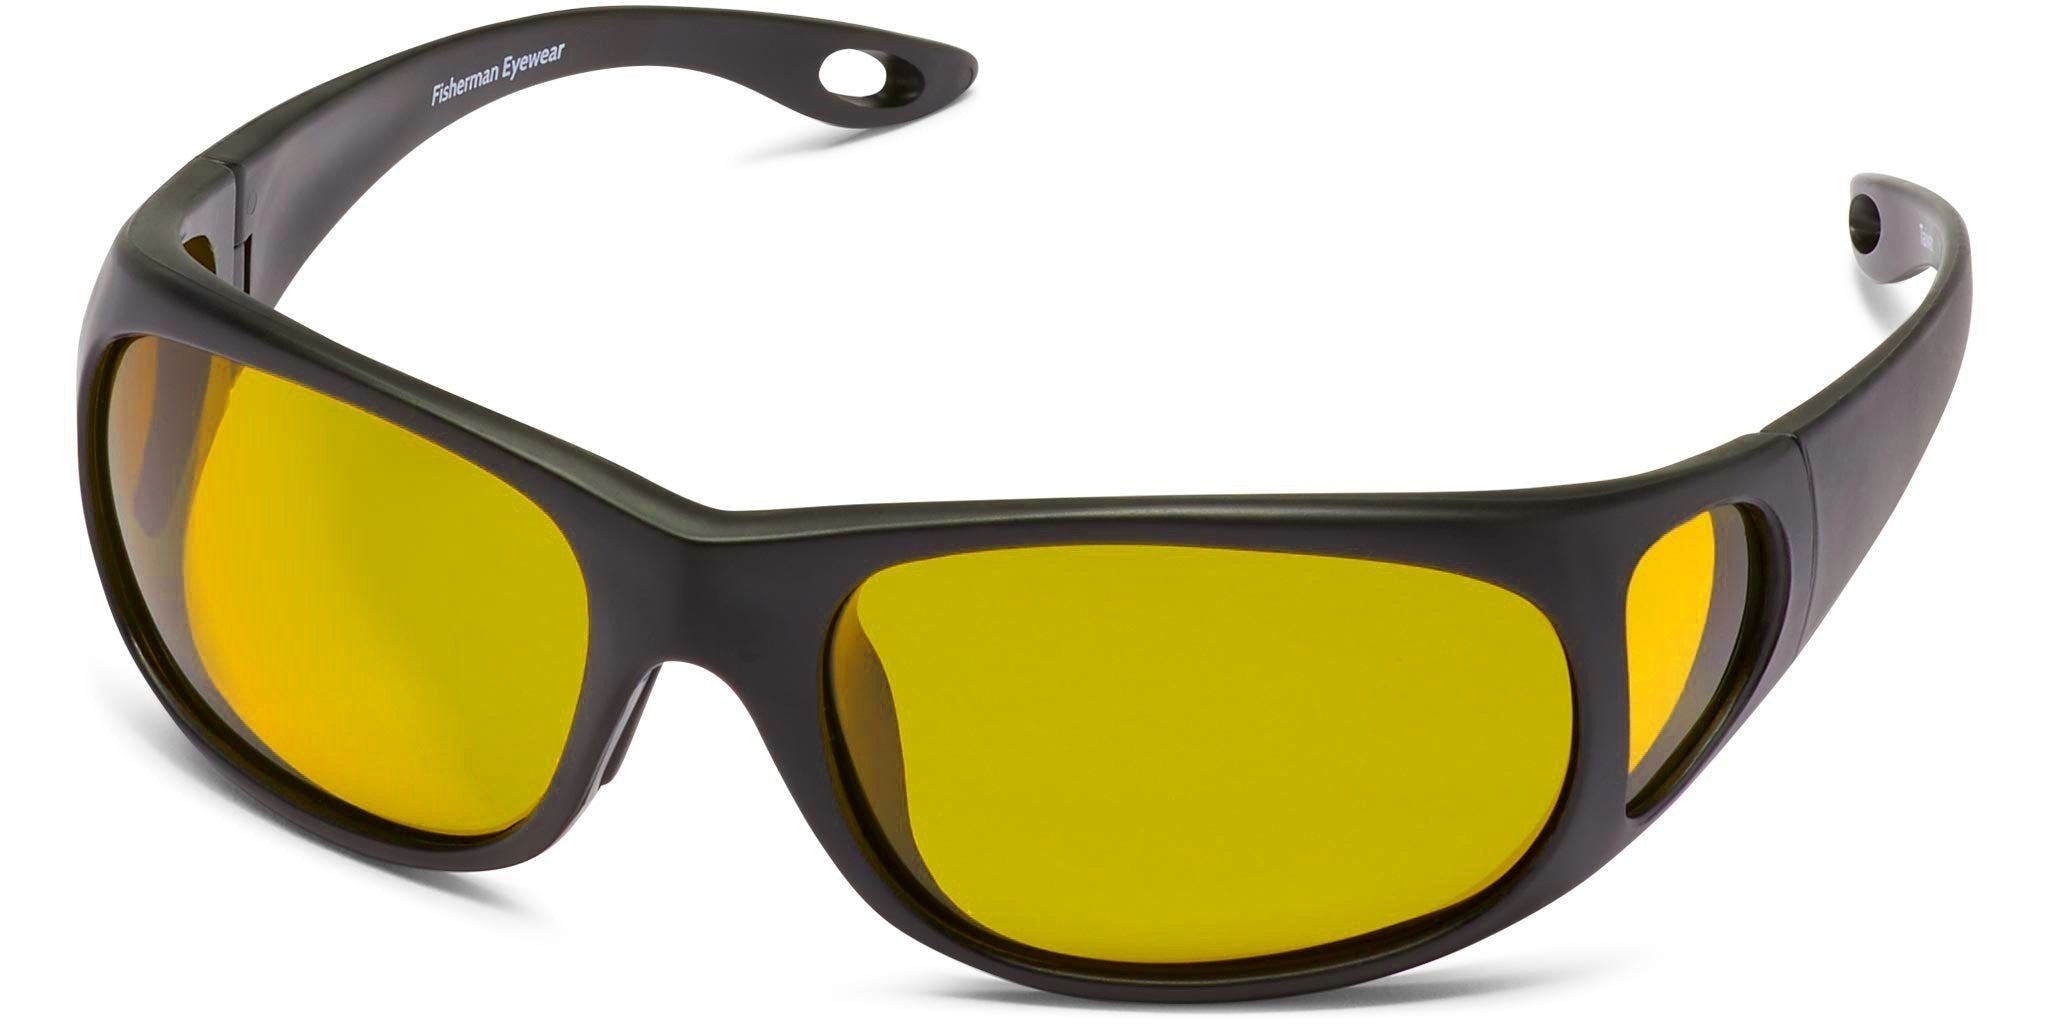 Fisherman Eyewear Grander Sunglasses - Matte Black Frame - Amber Lens